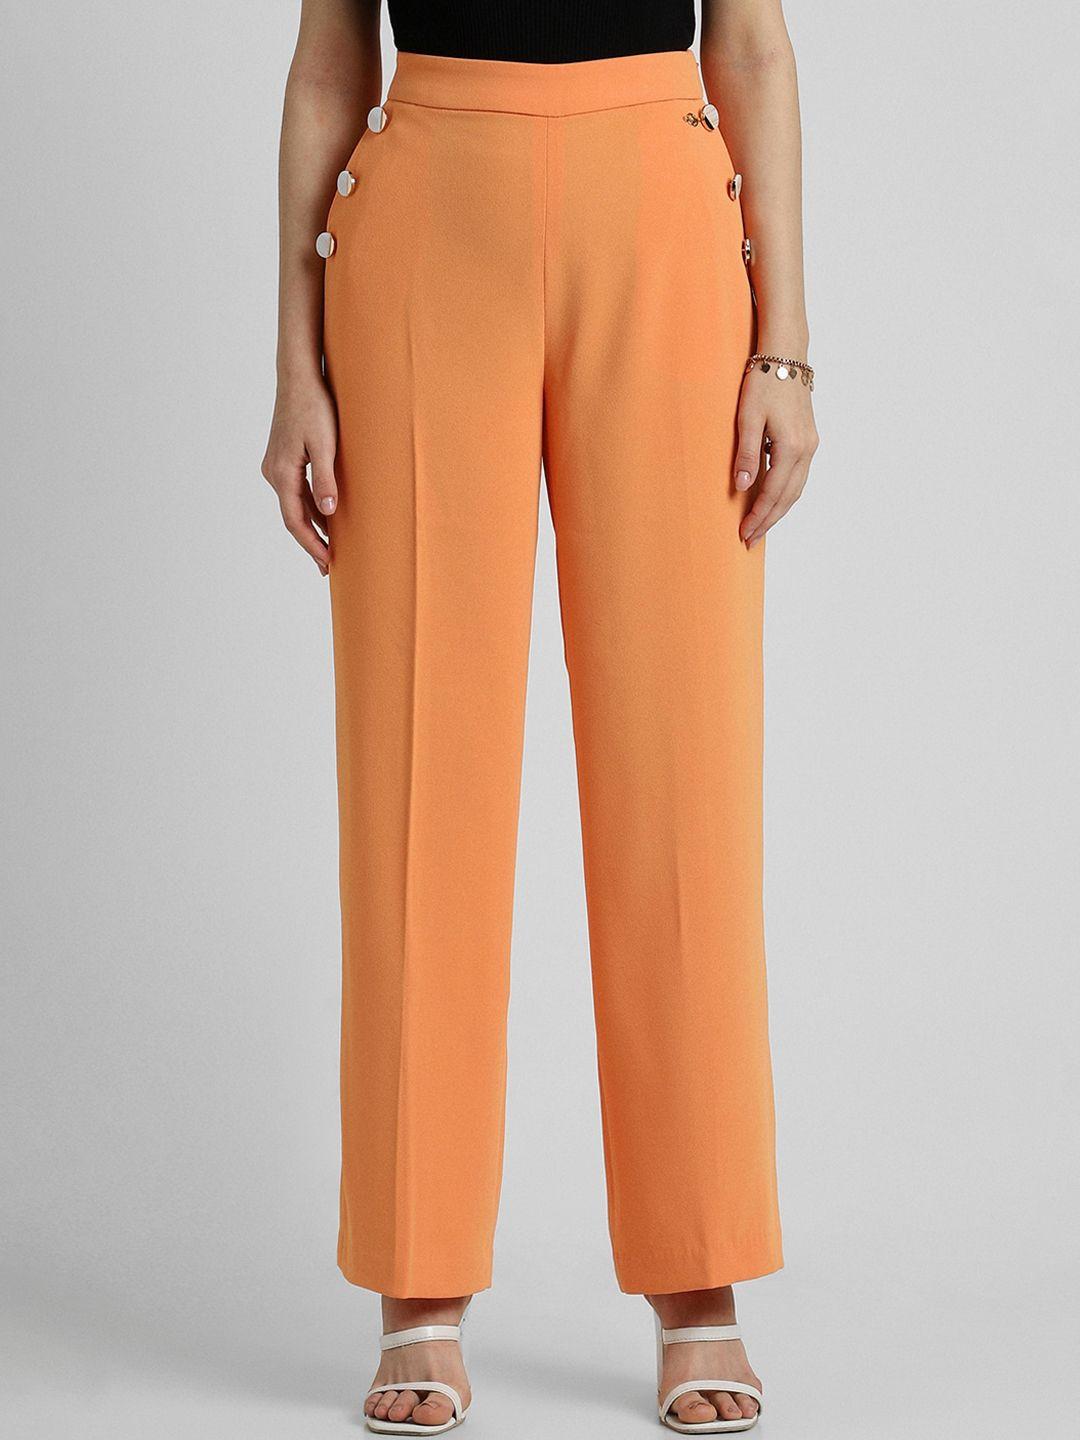 allen solly woman women orange regular fit high-rise parallel formal trousers